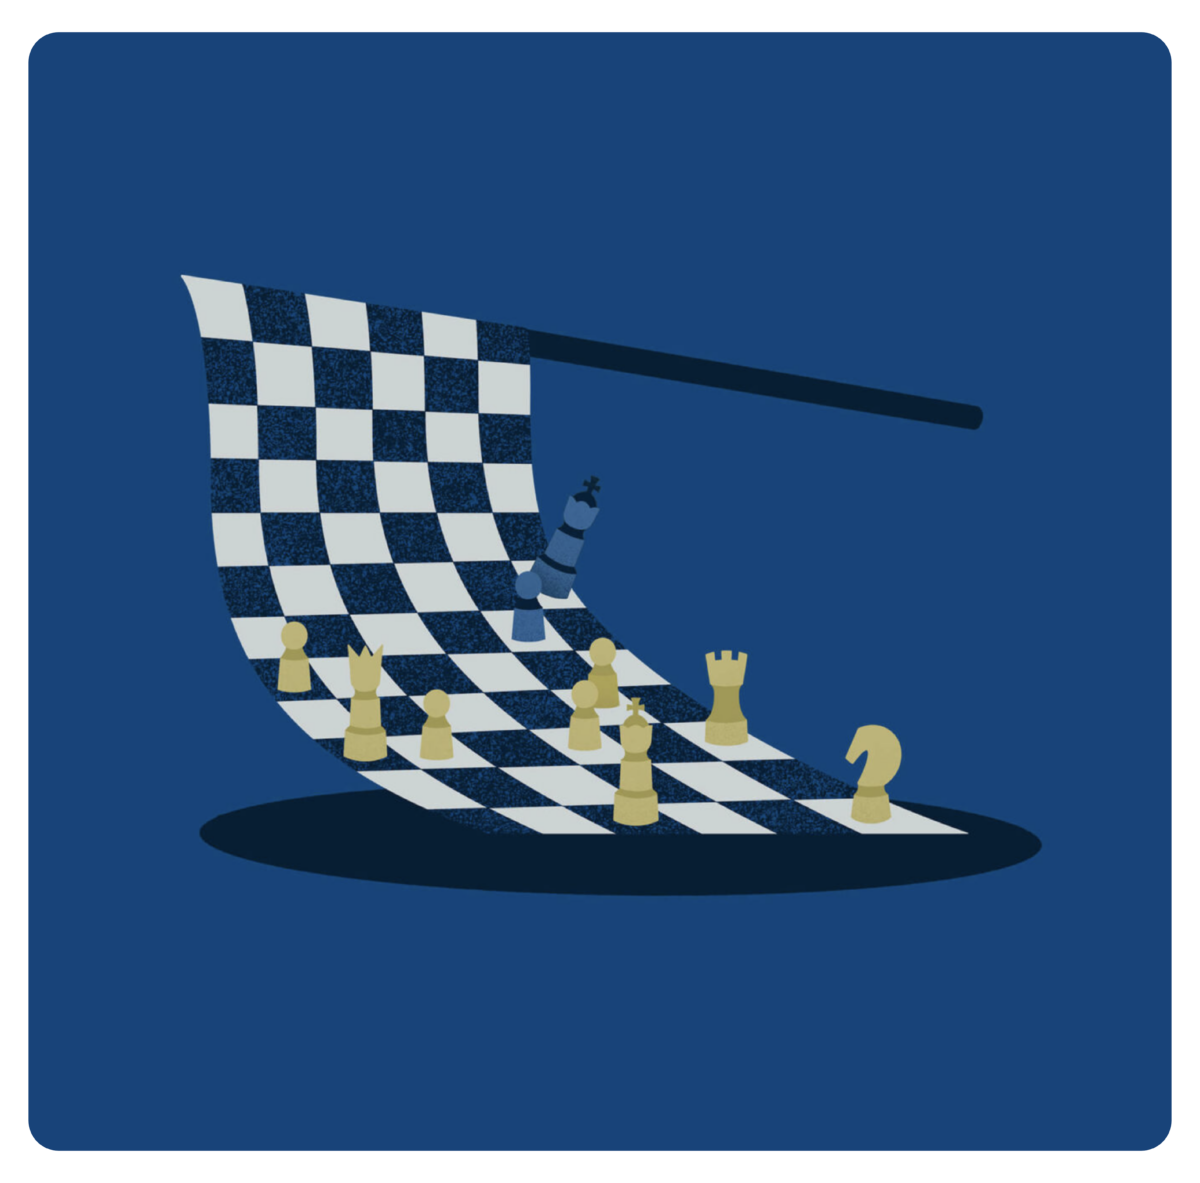 Chess board flag